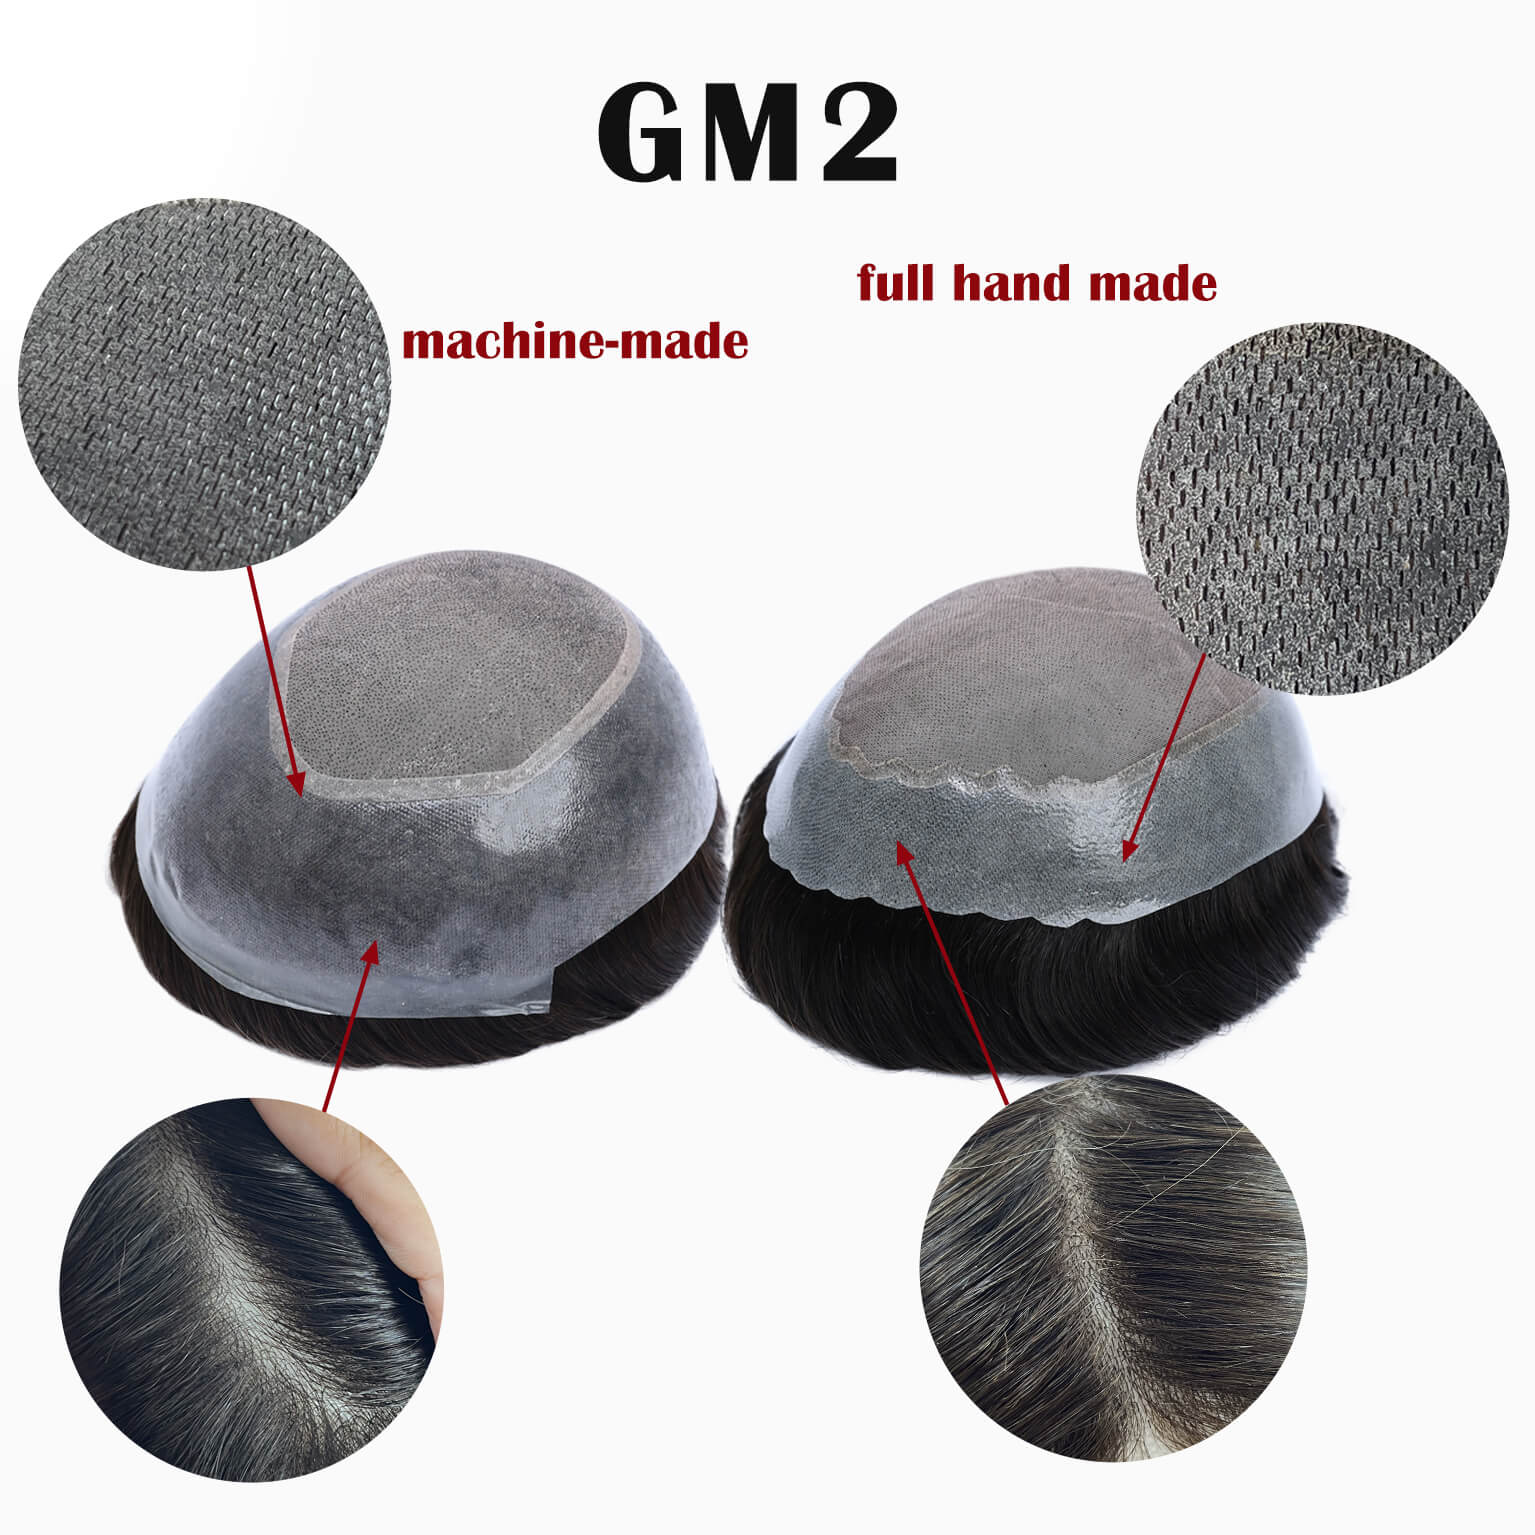 machina made gm2 monofilament toupees.jpg